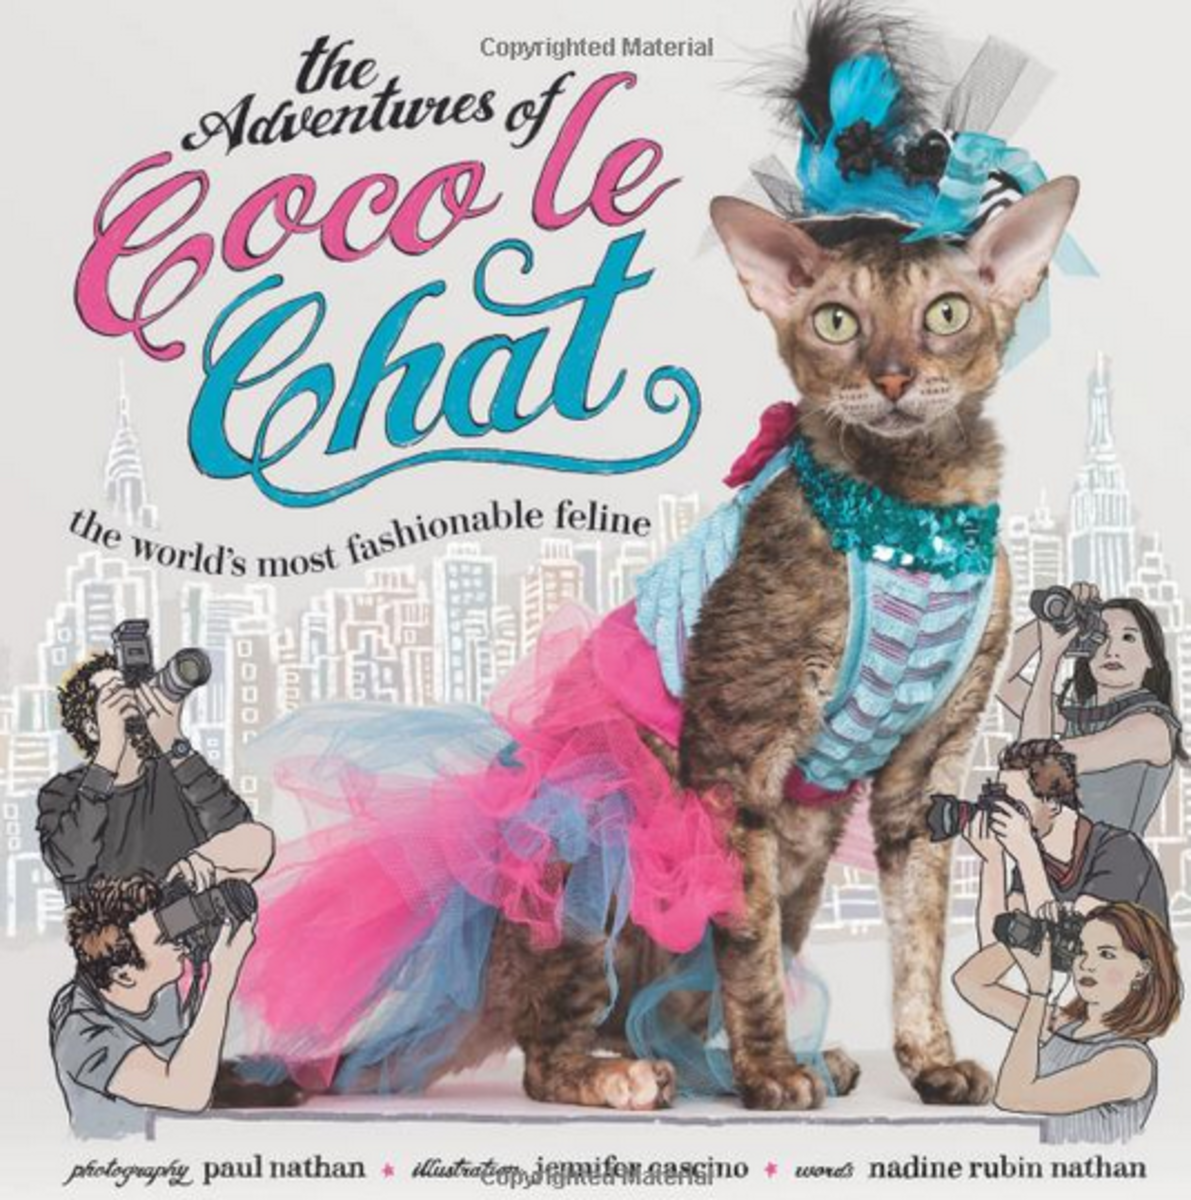 Coco Le Chat